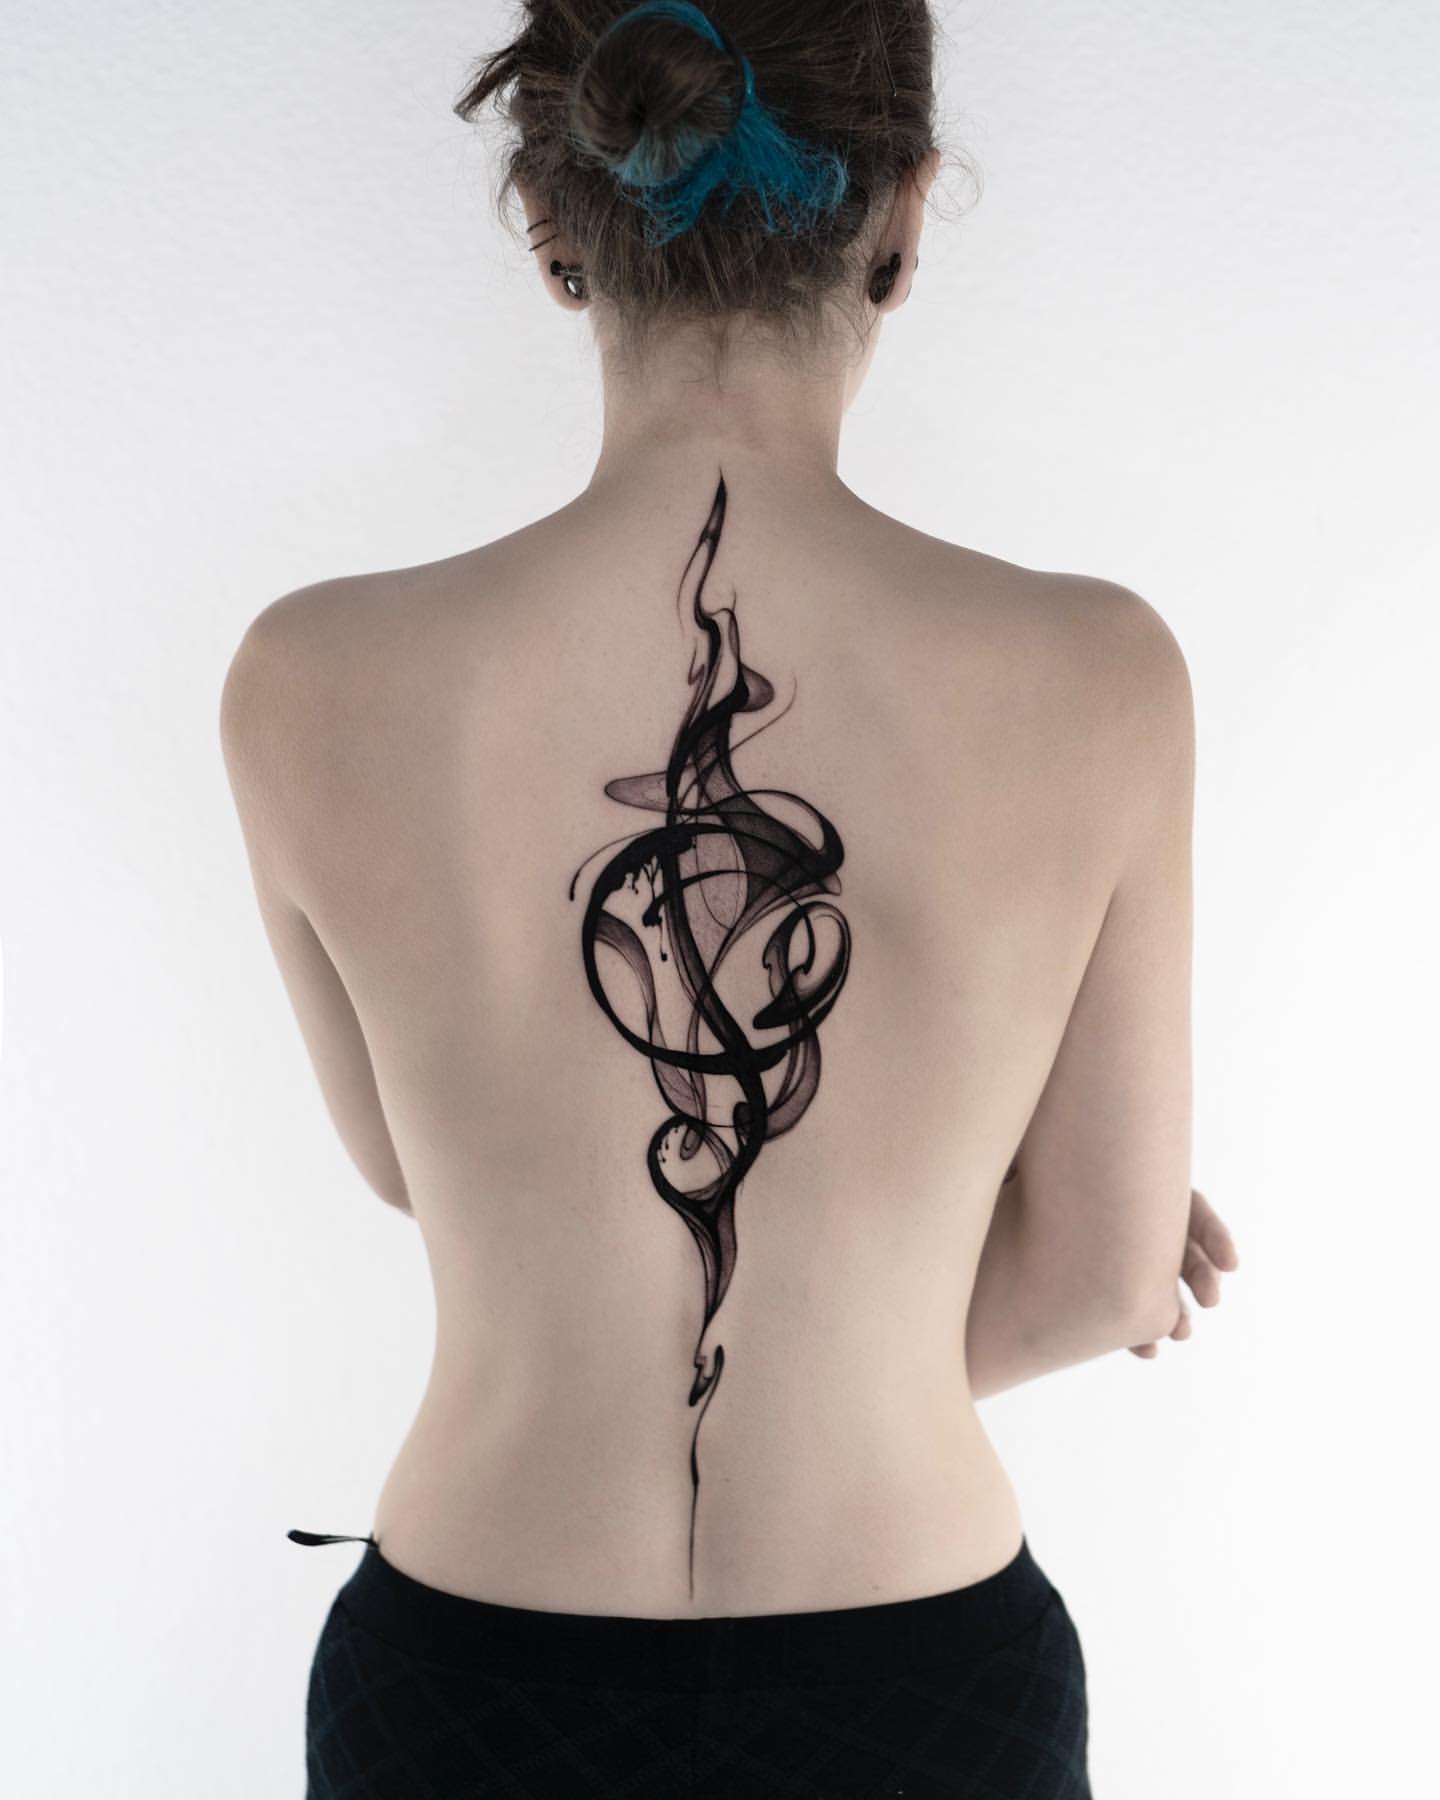 Spine Tattoos for Women 20